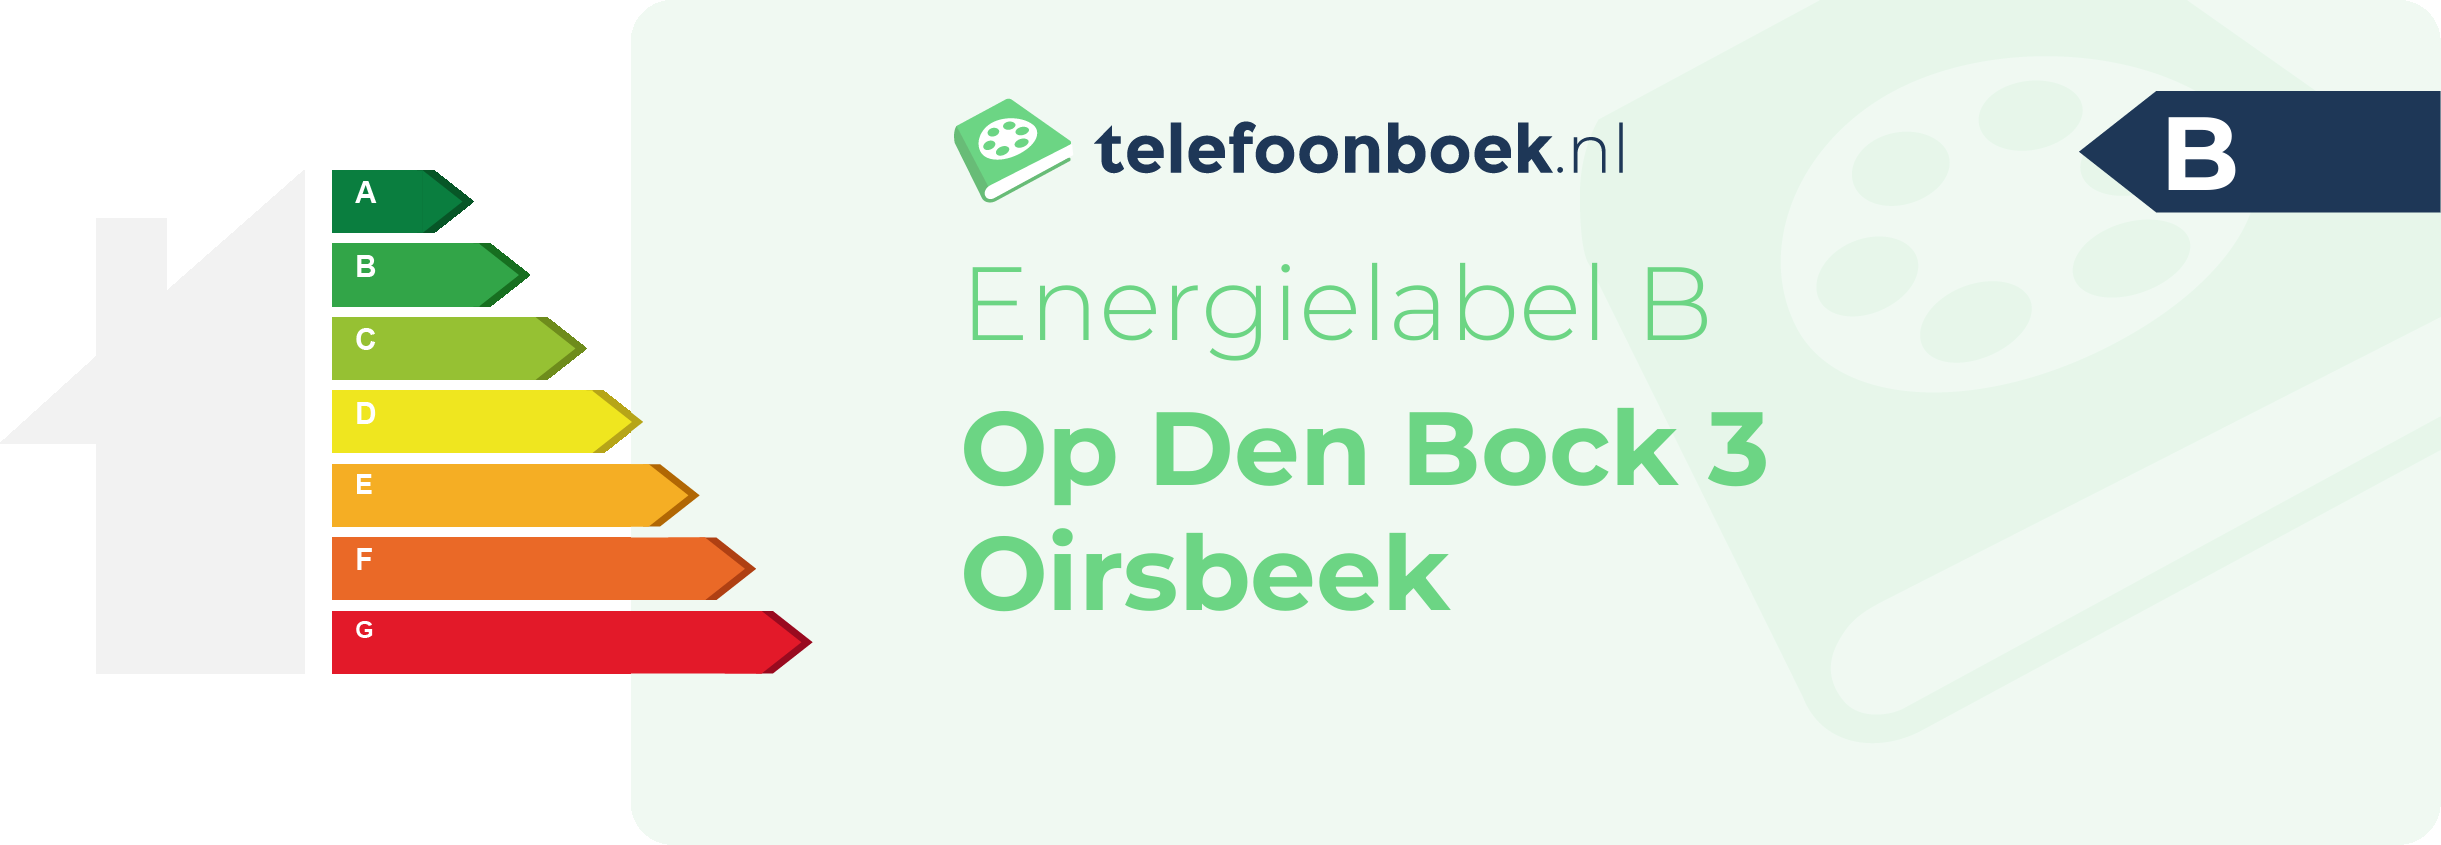 Energielabel Op Den Bock 3 Oirsbeek